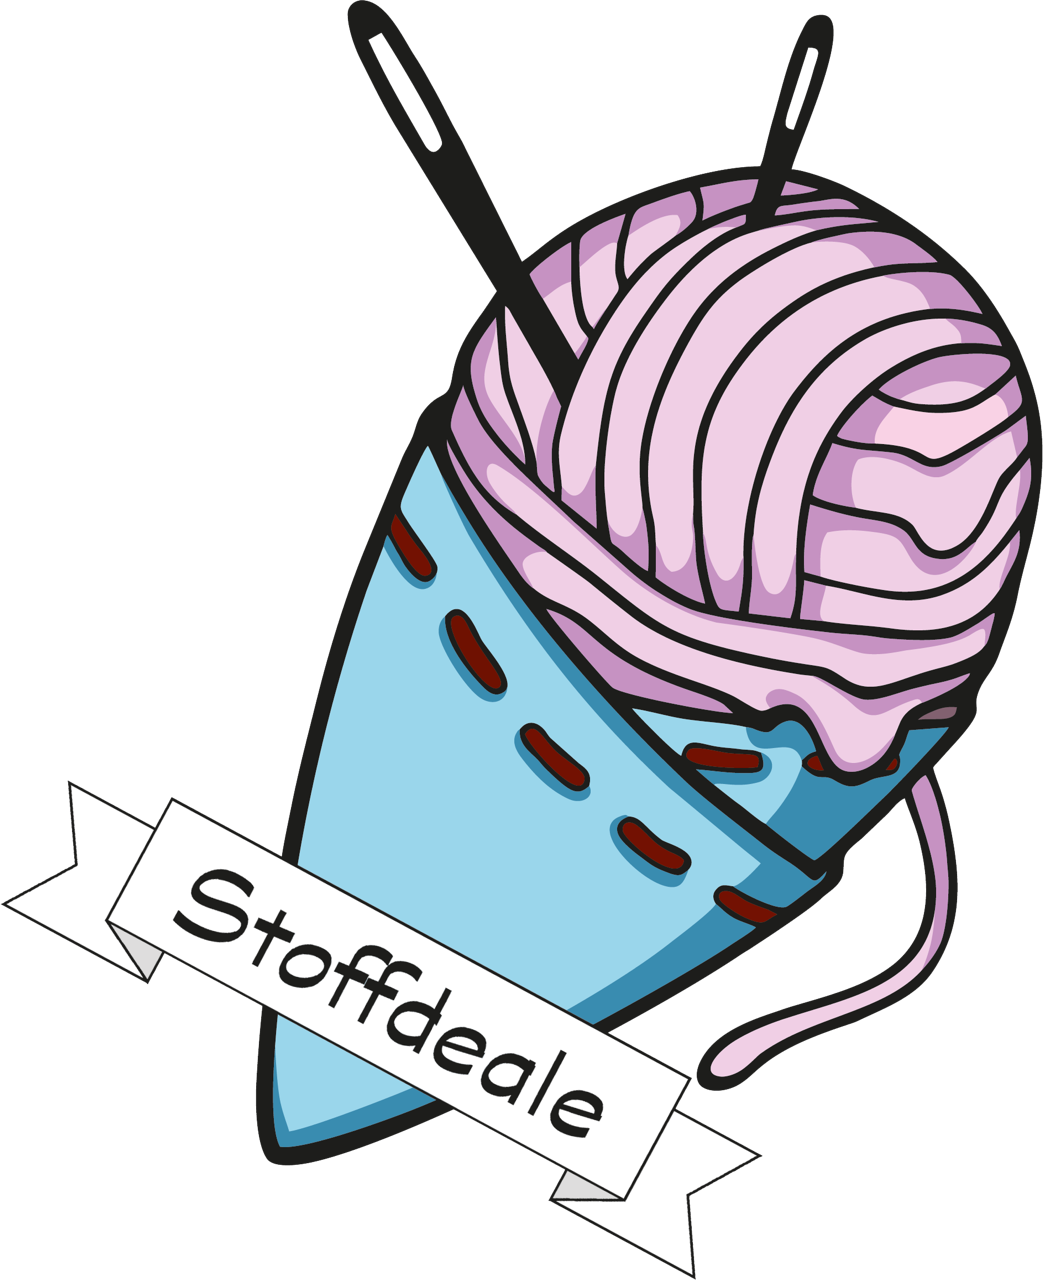 Stoffdeale Logo